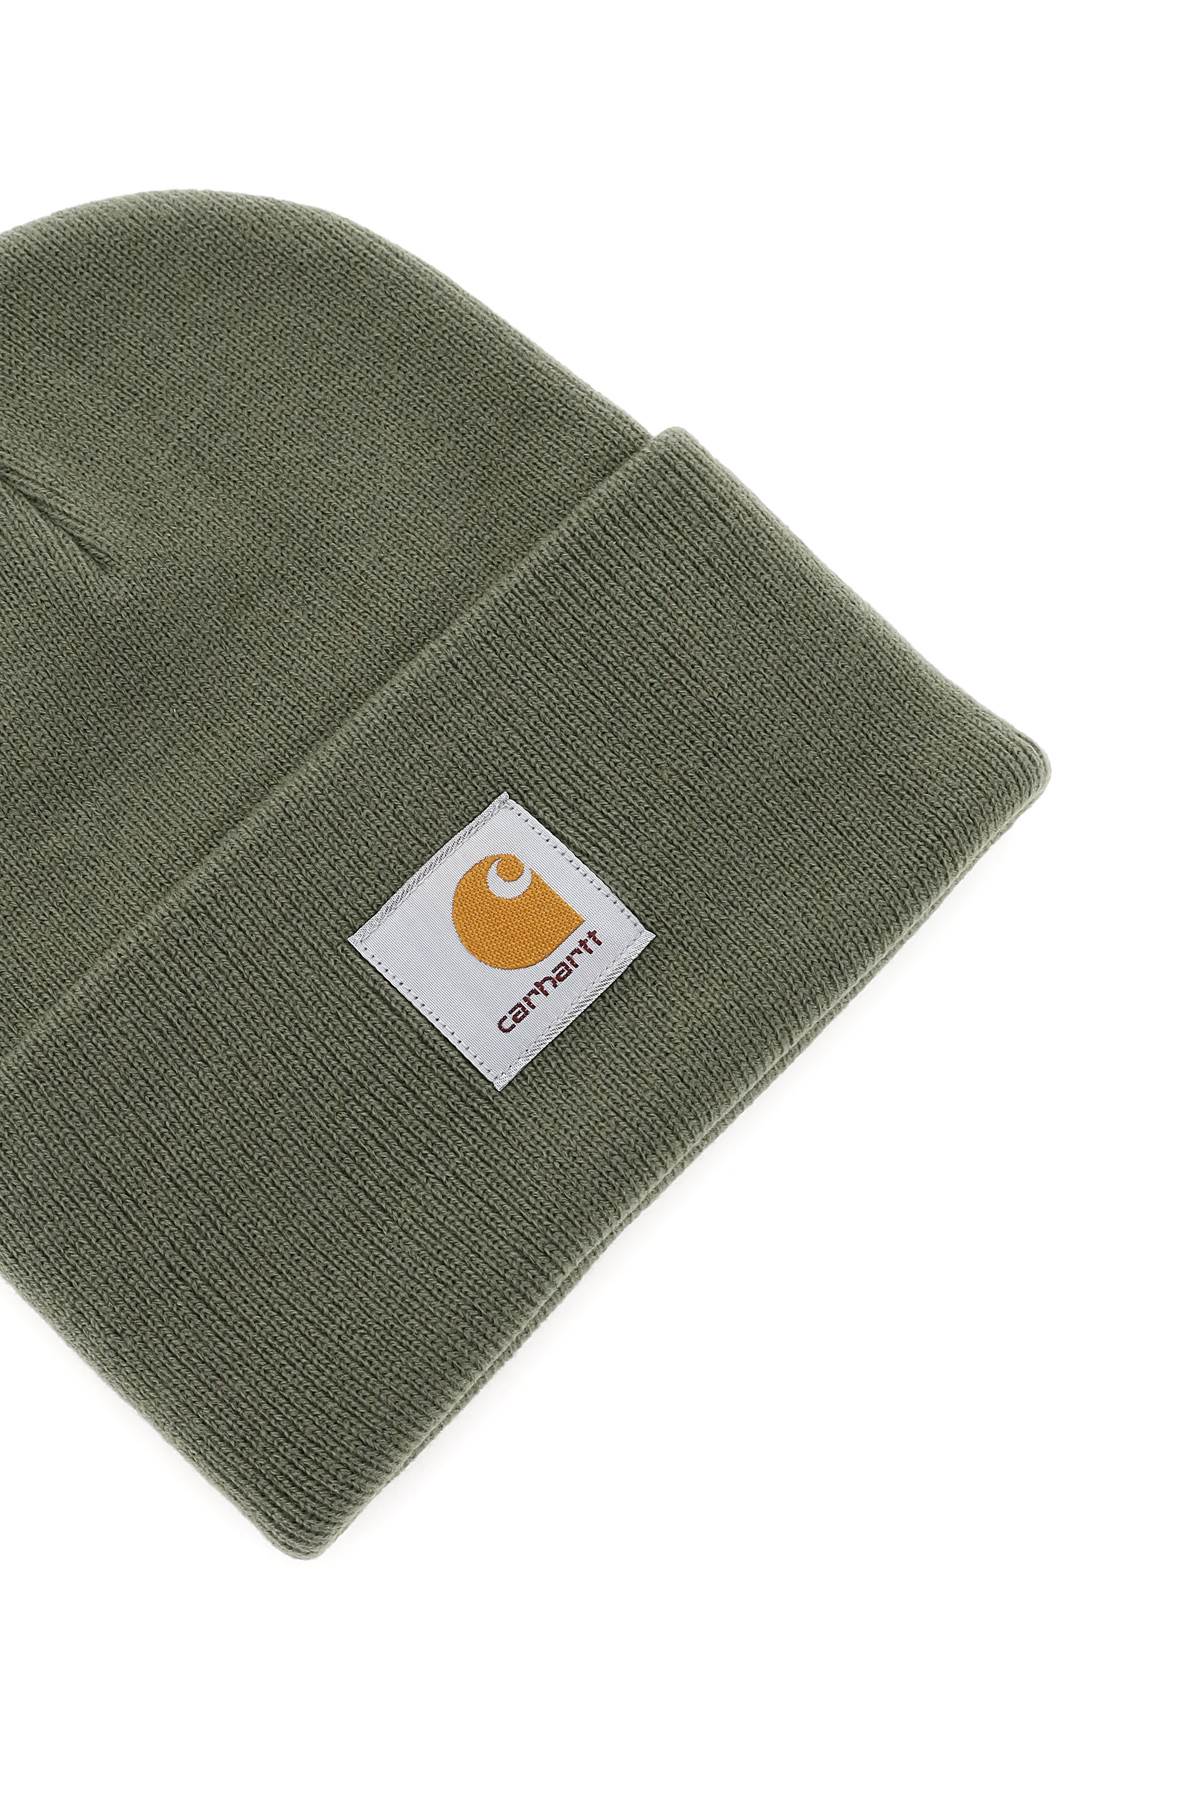 Carhartt Wip Carhartt wip beanie hat with logo patch